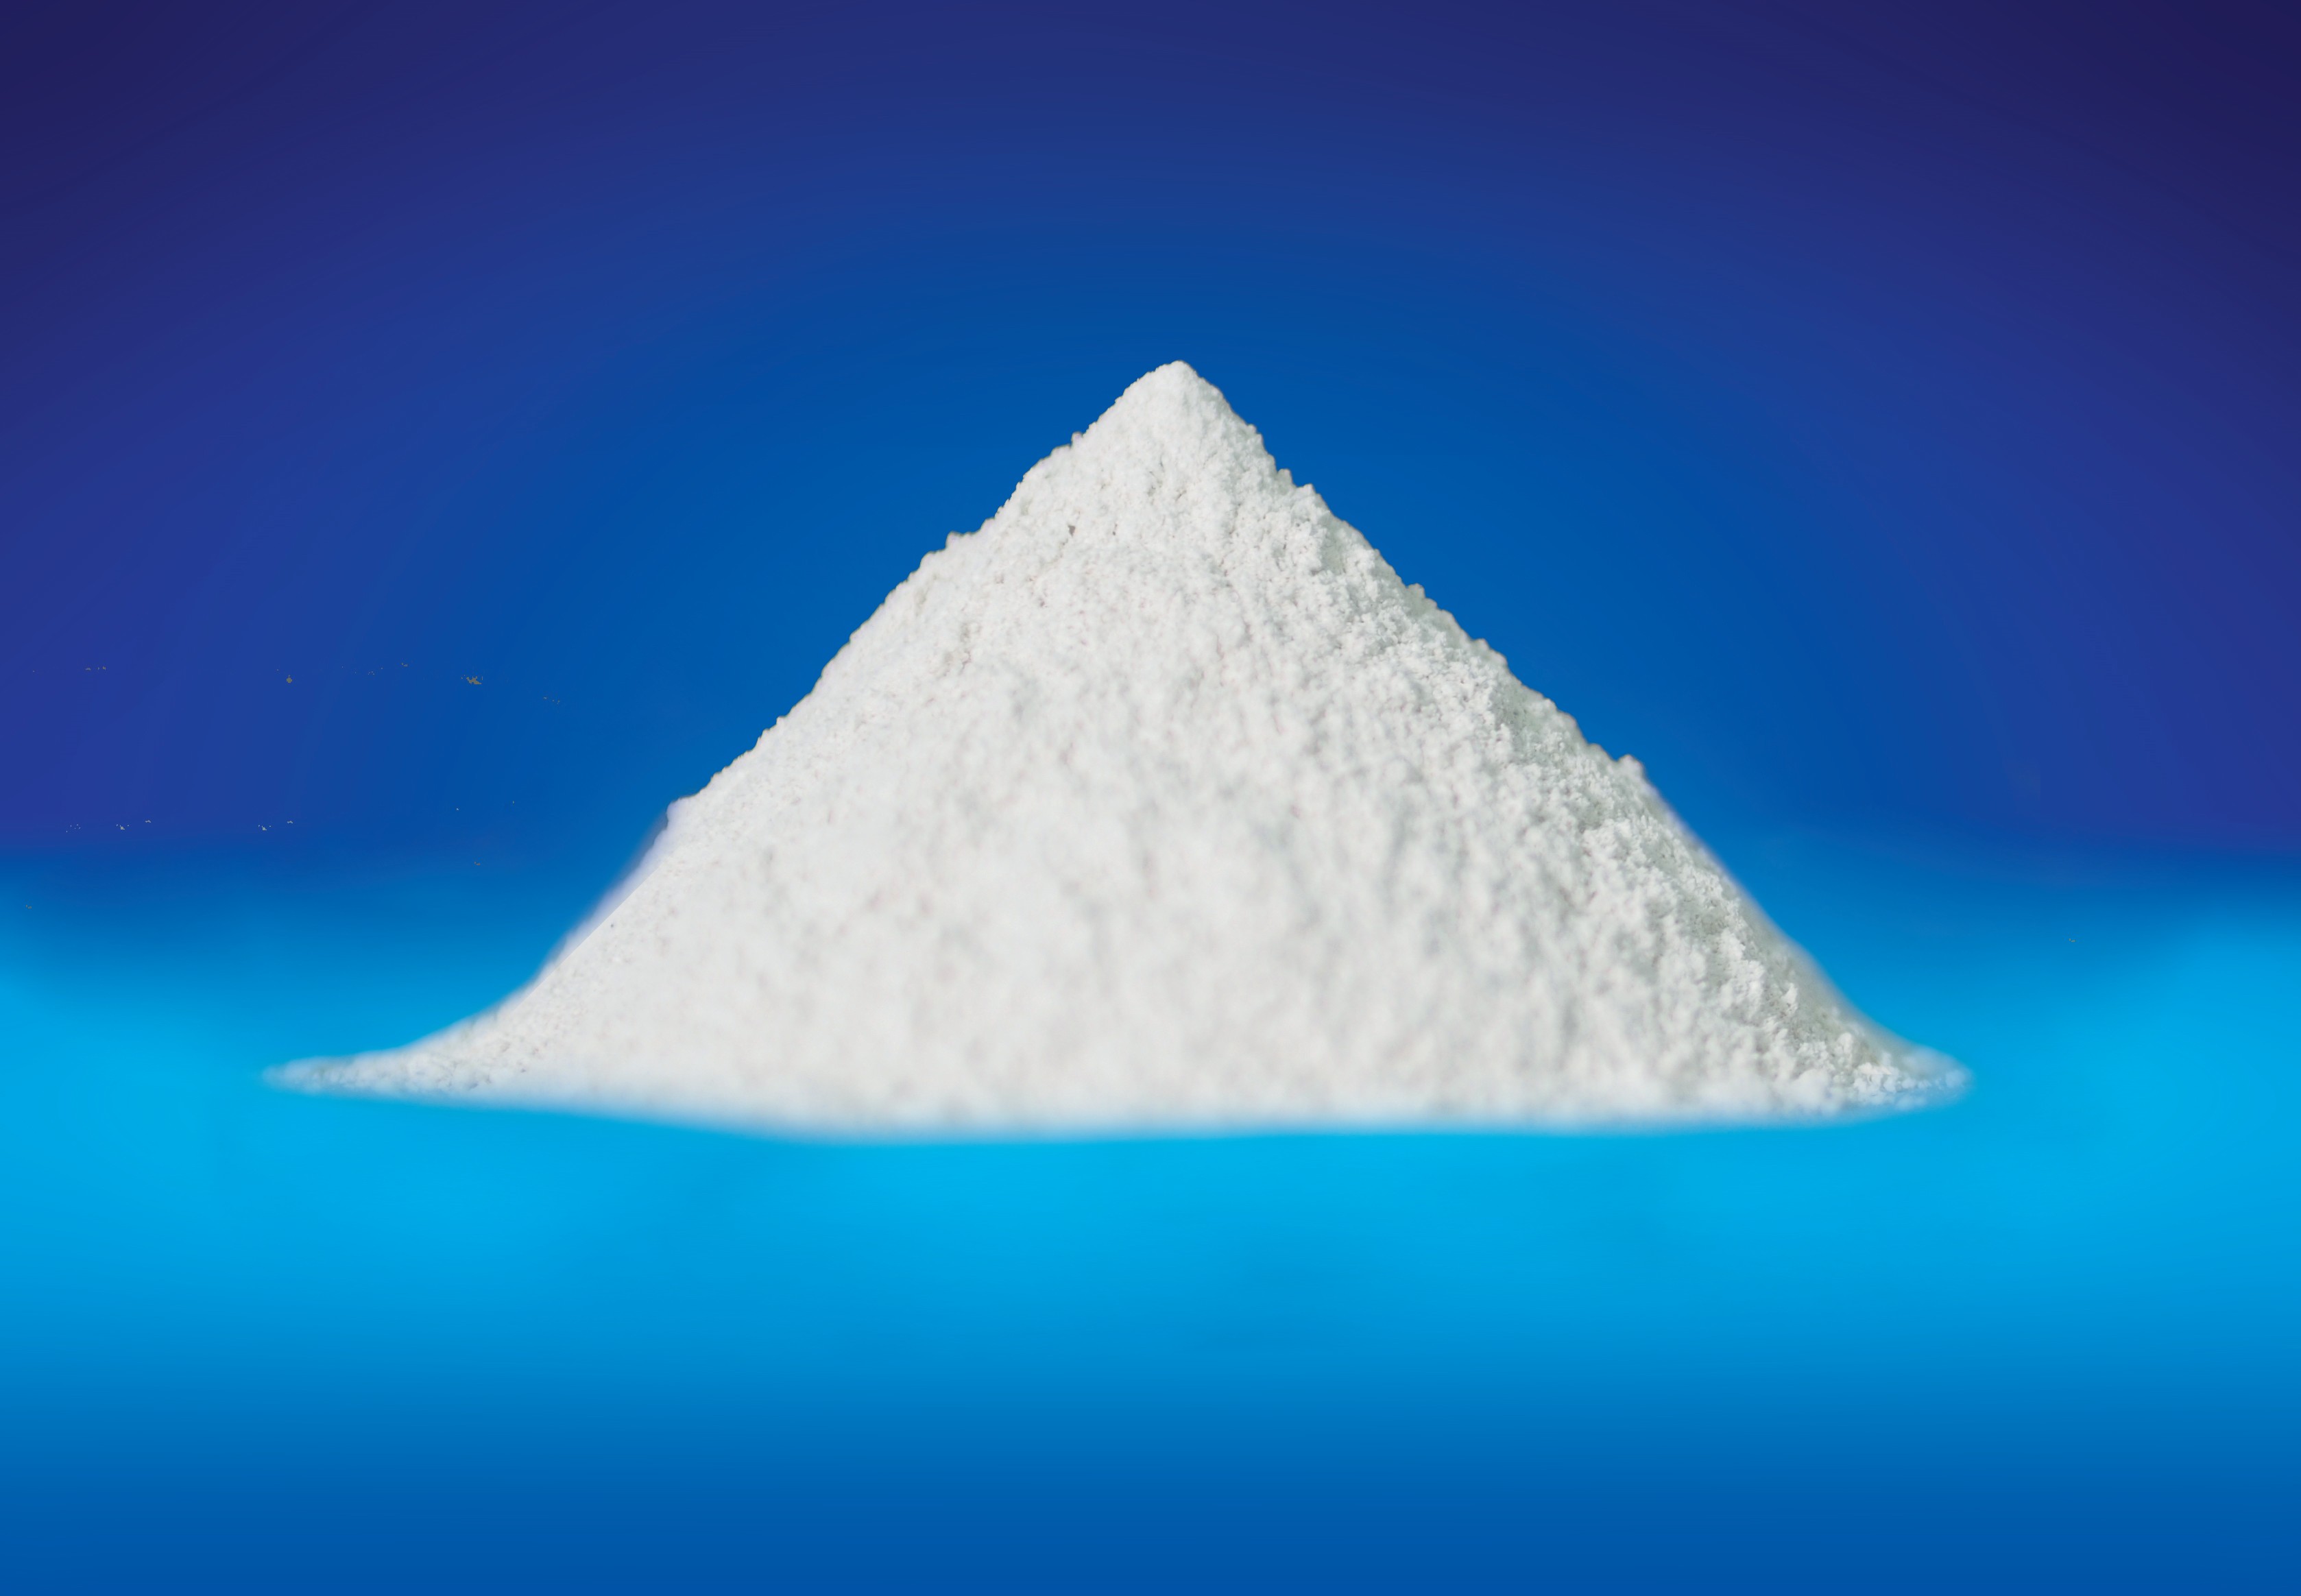 Serbuk magnesium sulfat monohidrat dan bahan tambahan makanan haiwan kristal heptahidrat